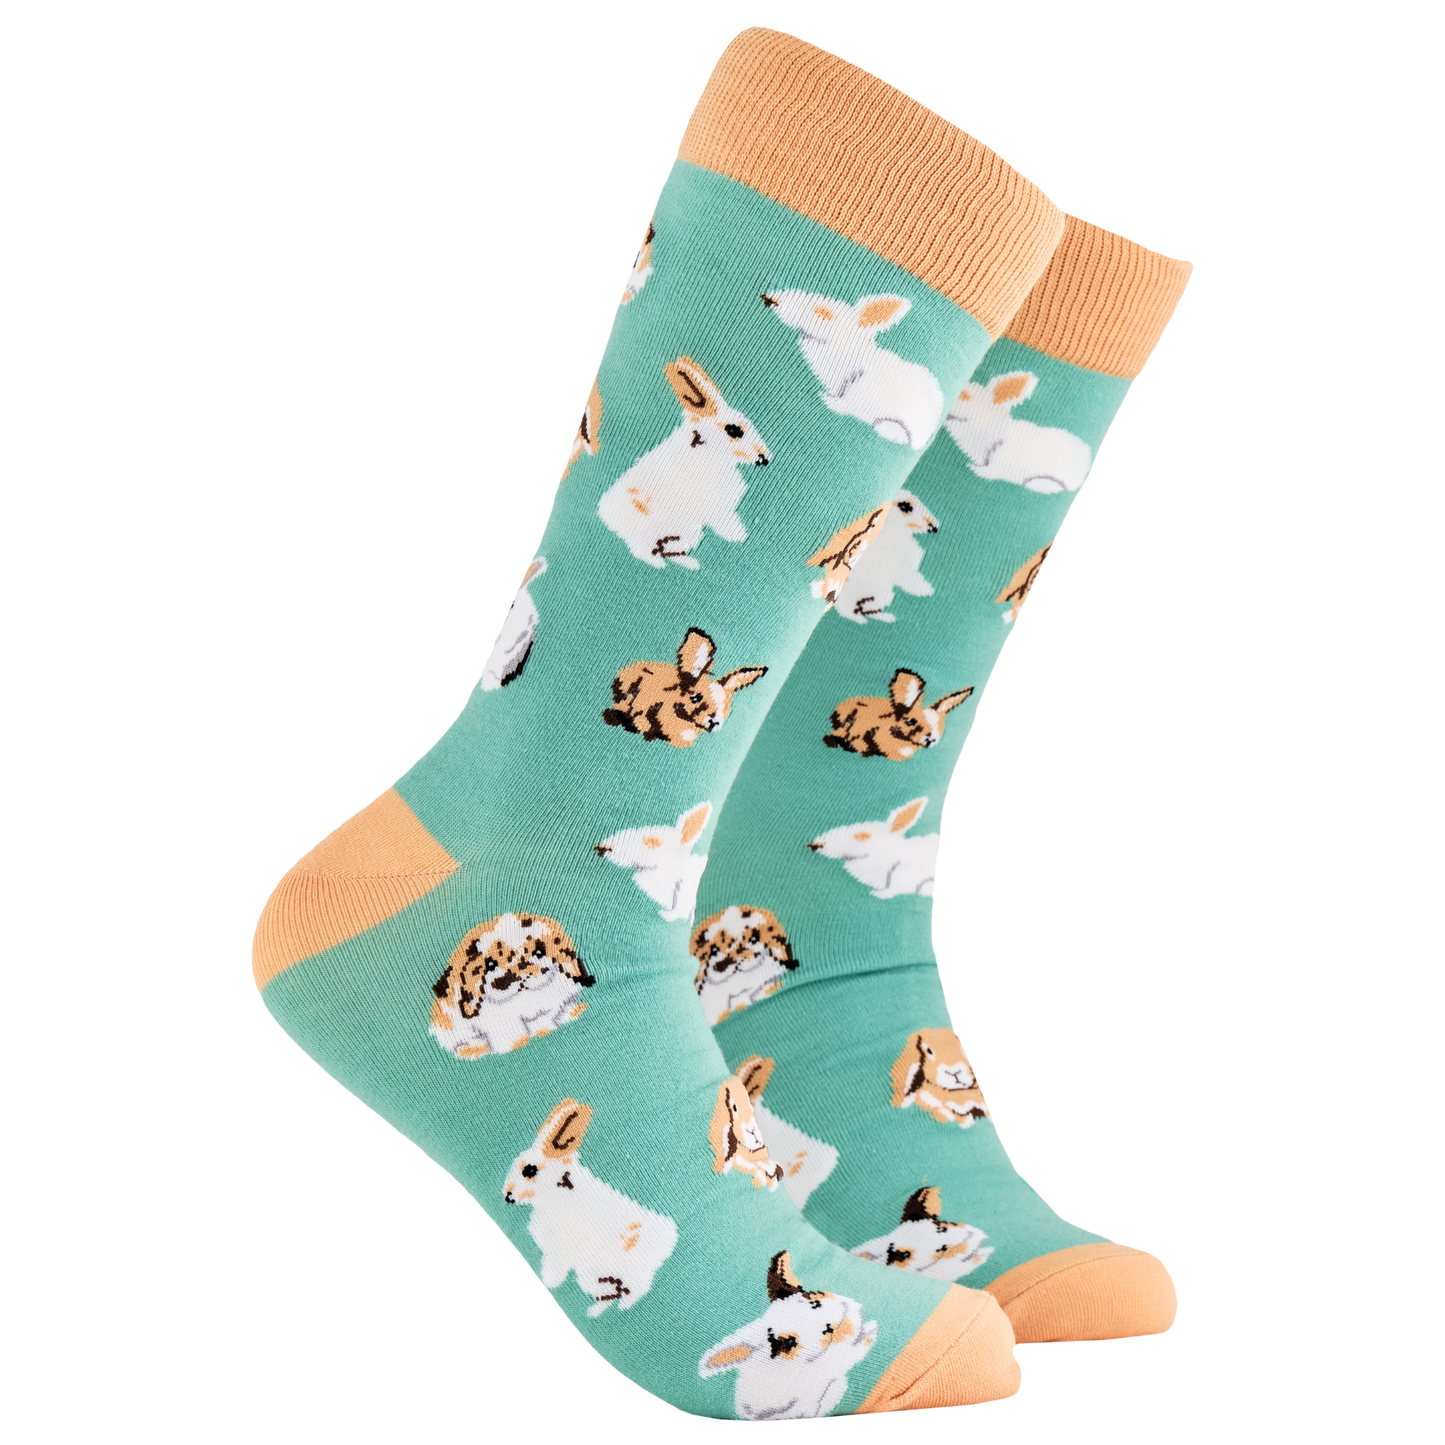 Rabbit Socks - Hop. A pair of socks depicting rabbits playing. Green legs, brown cuff, heel and toe.